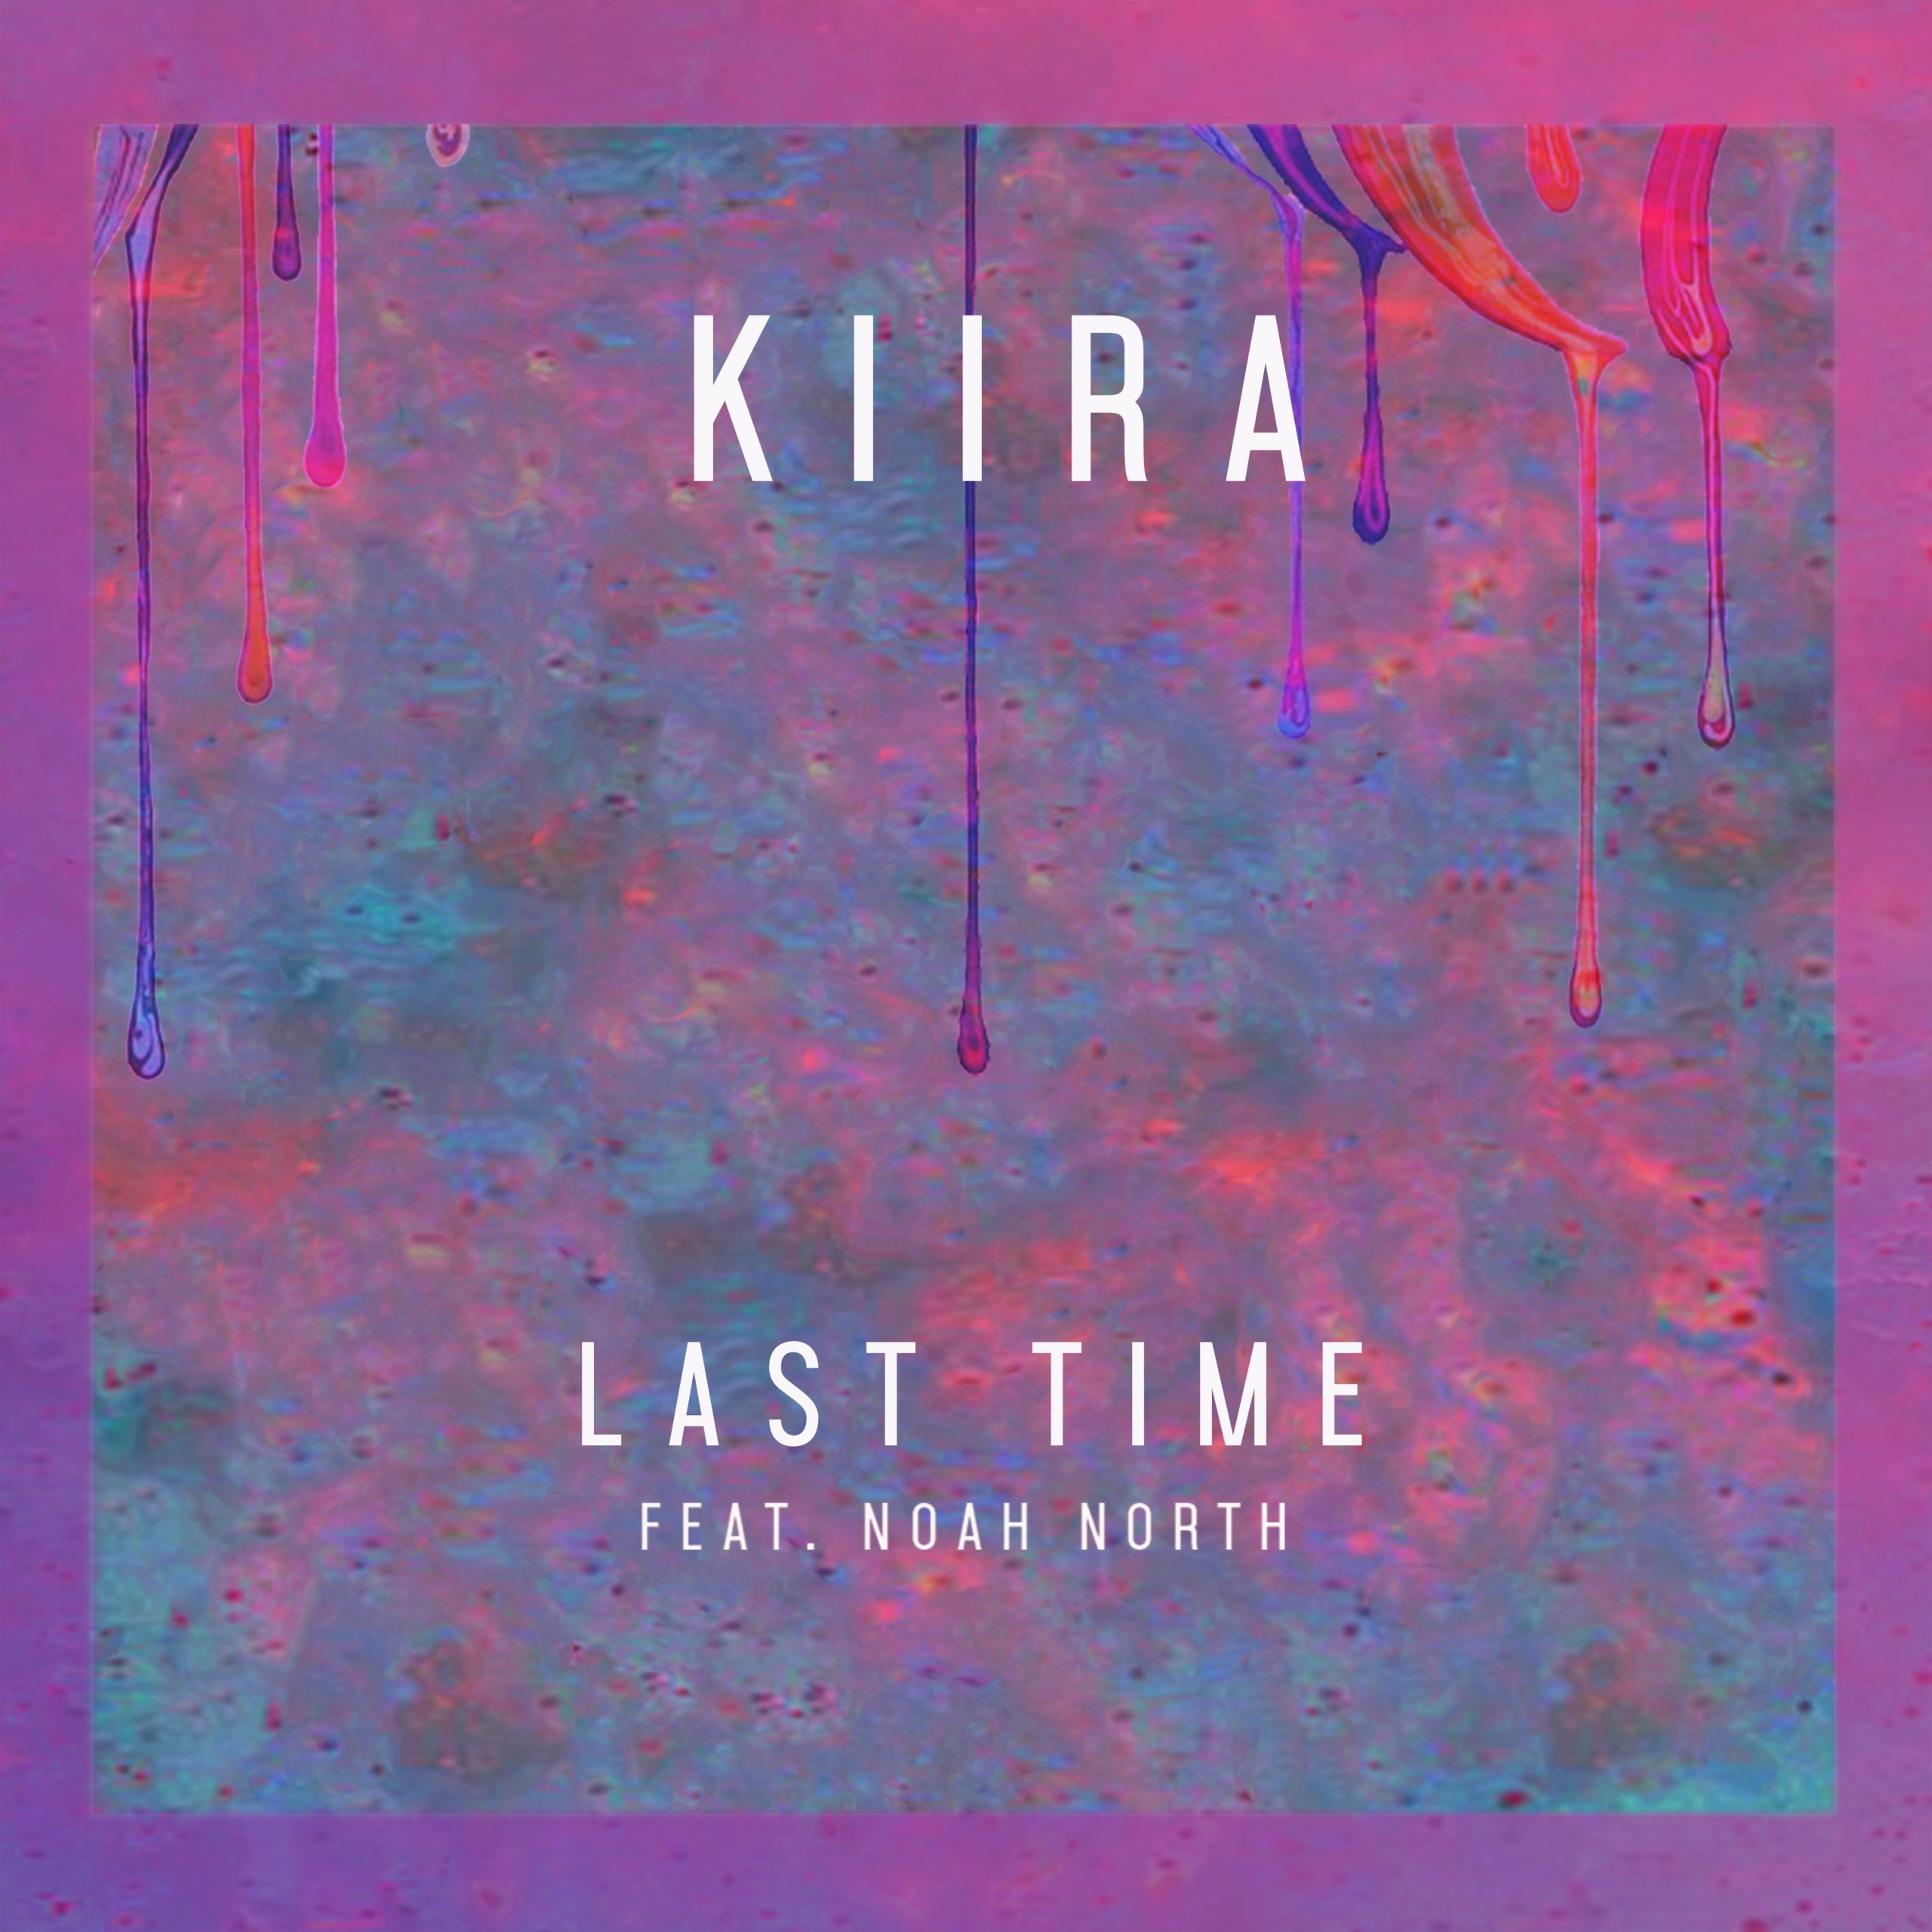 KIIRA – “Last Time” Feat. Noah North